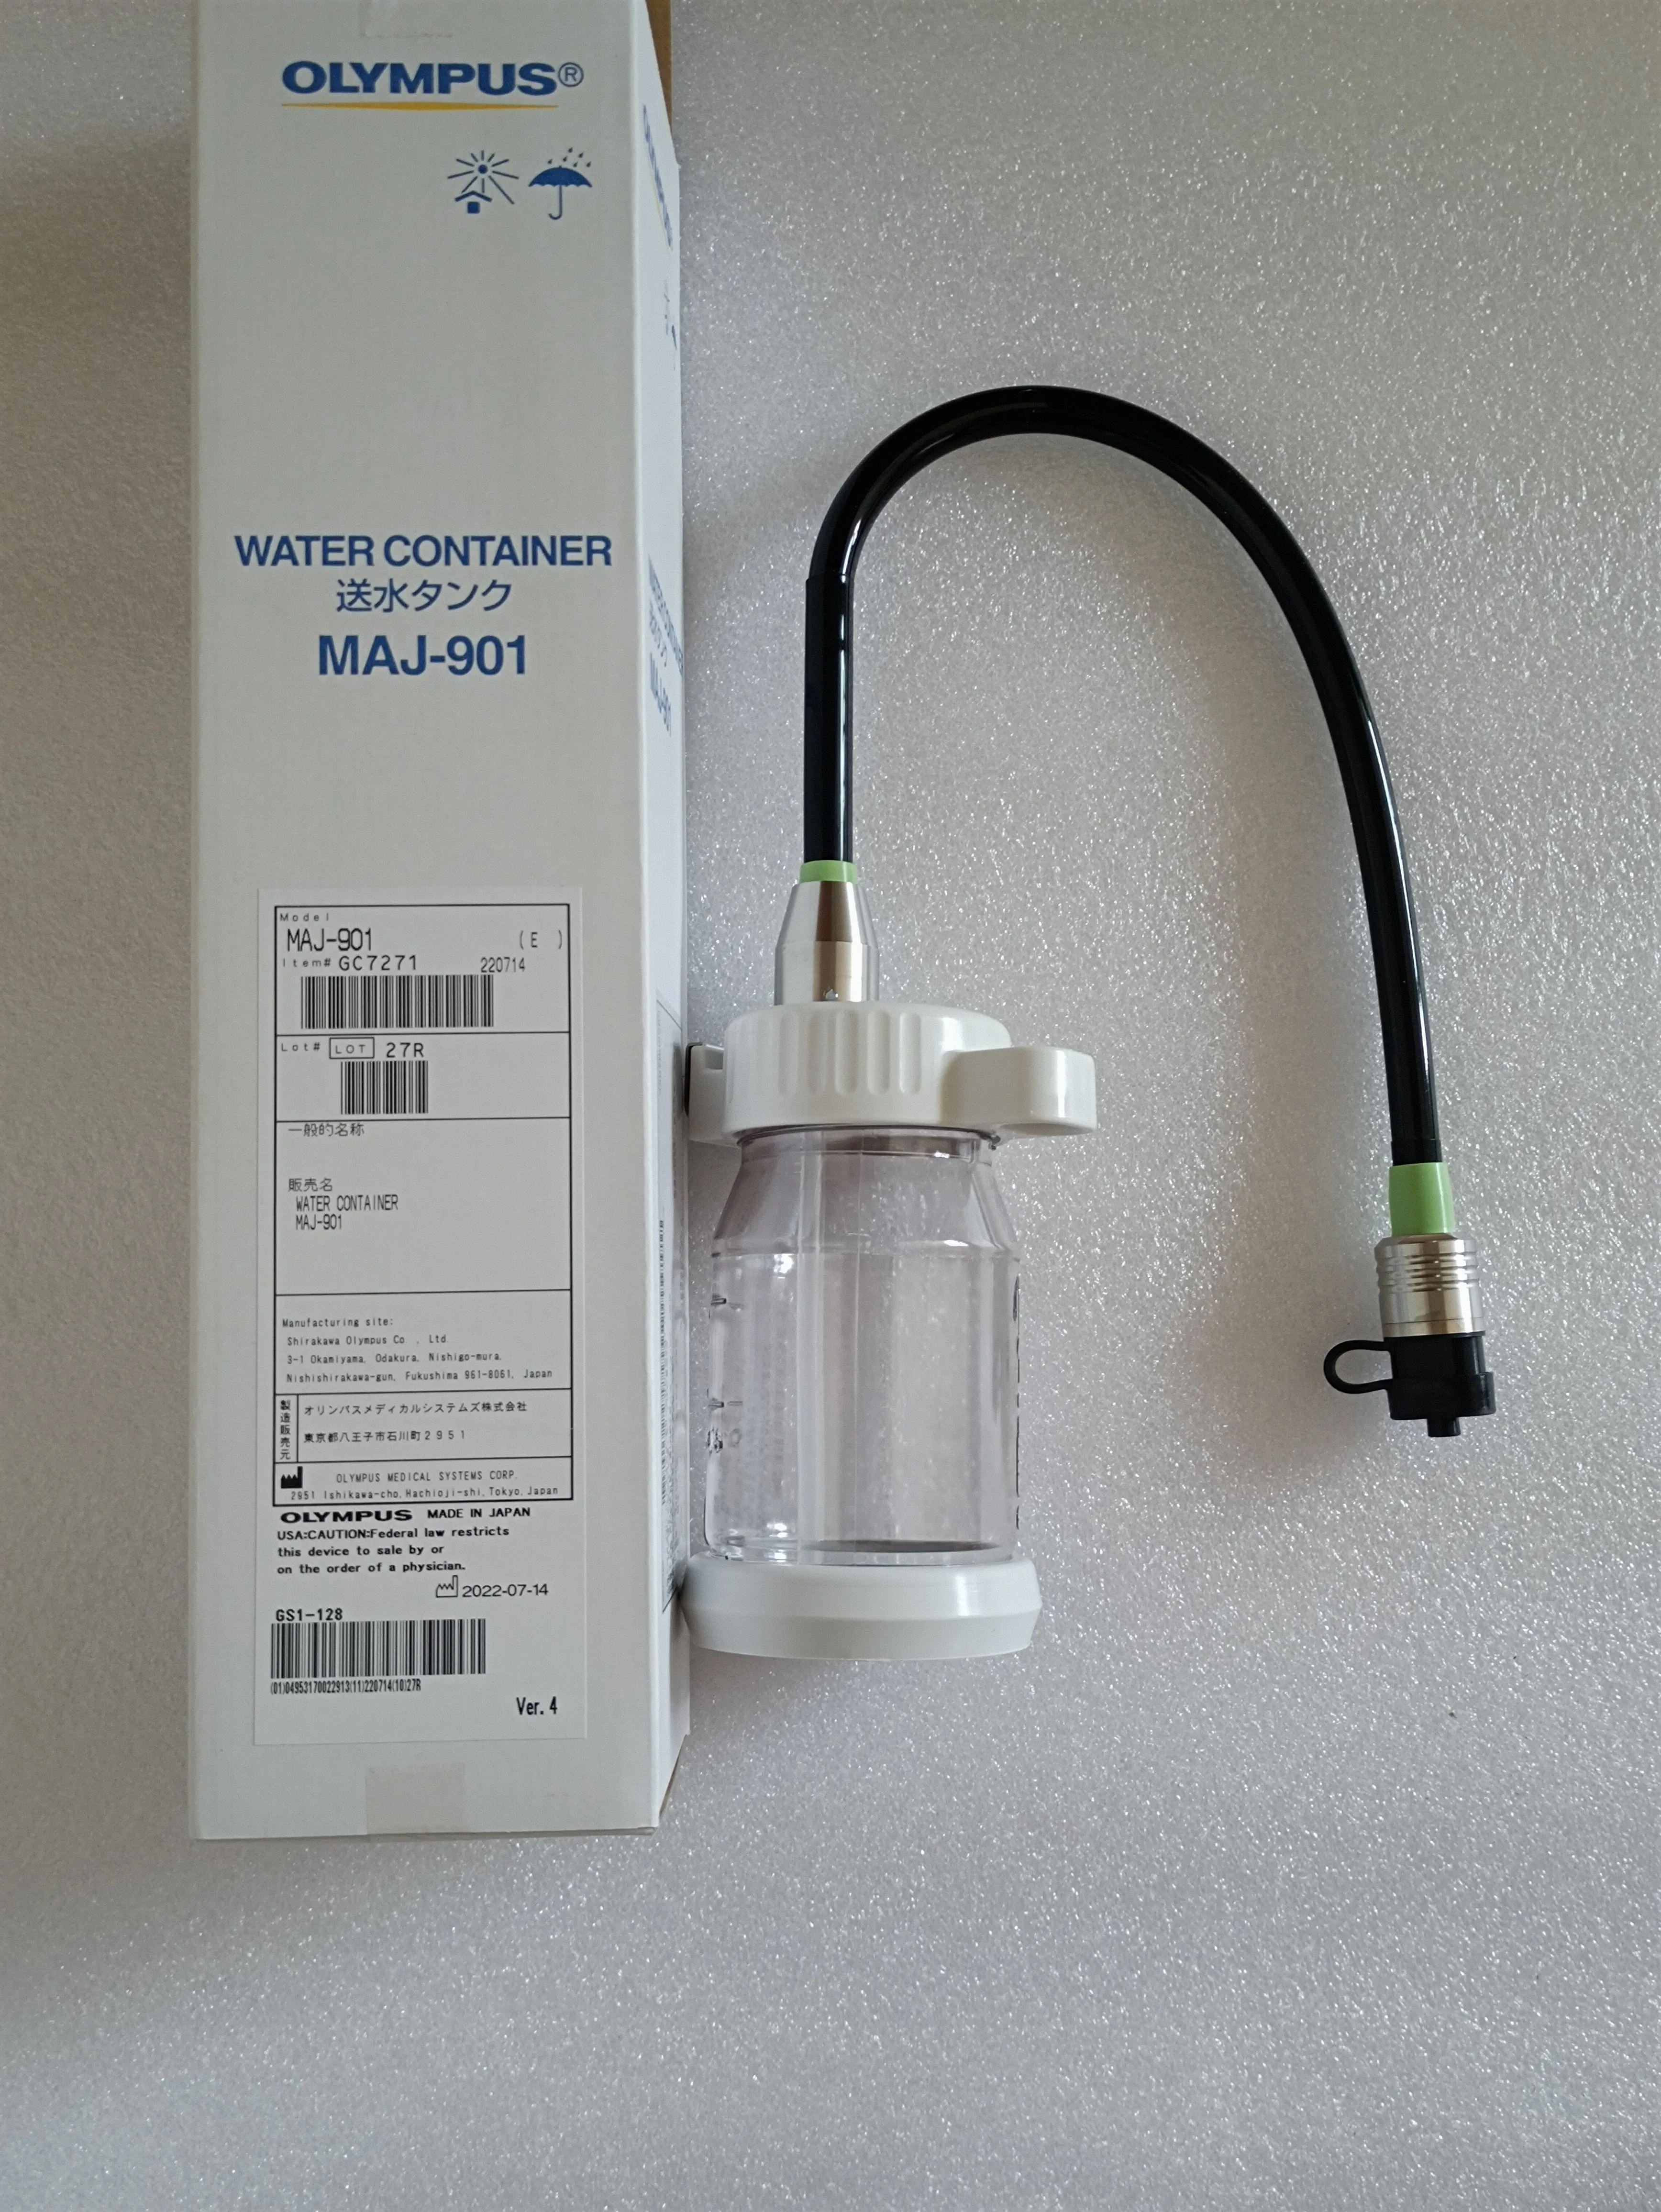 Rubber Water Bottle Protector for MAJ-901 - MAJ-905 [1 Piece]